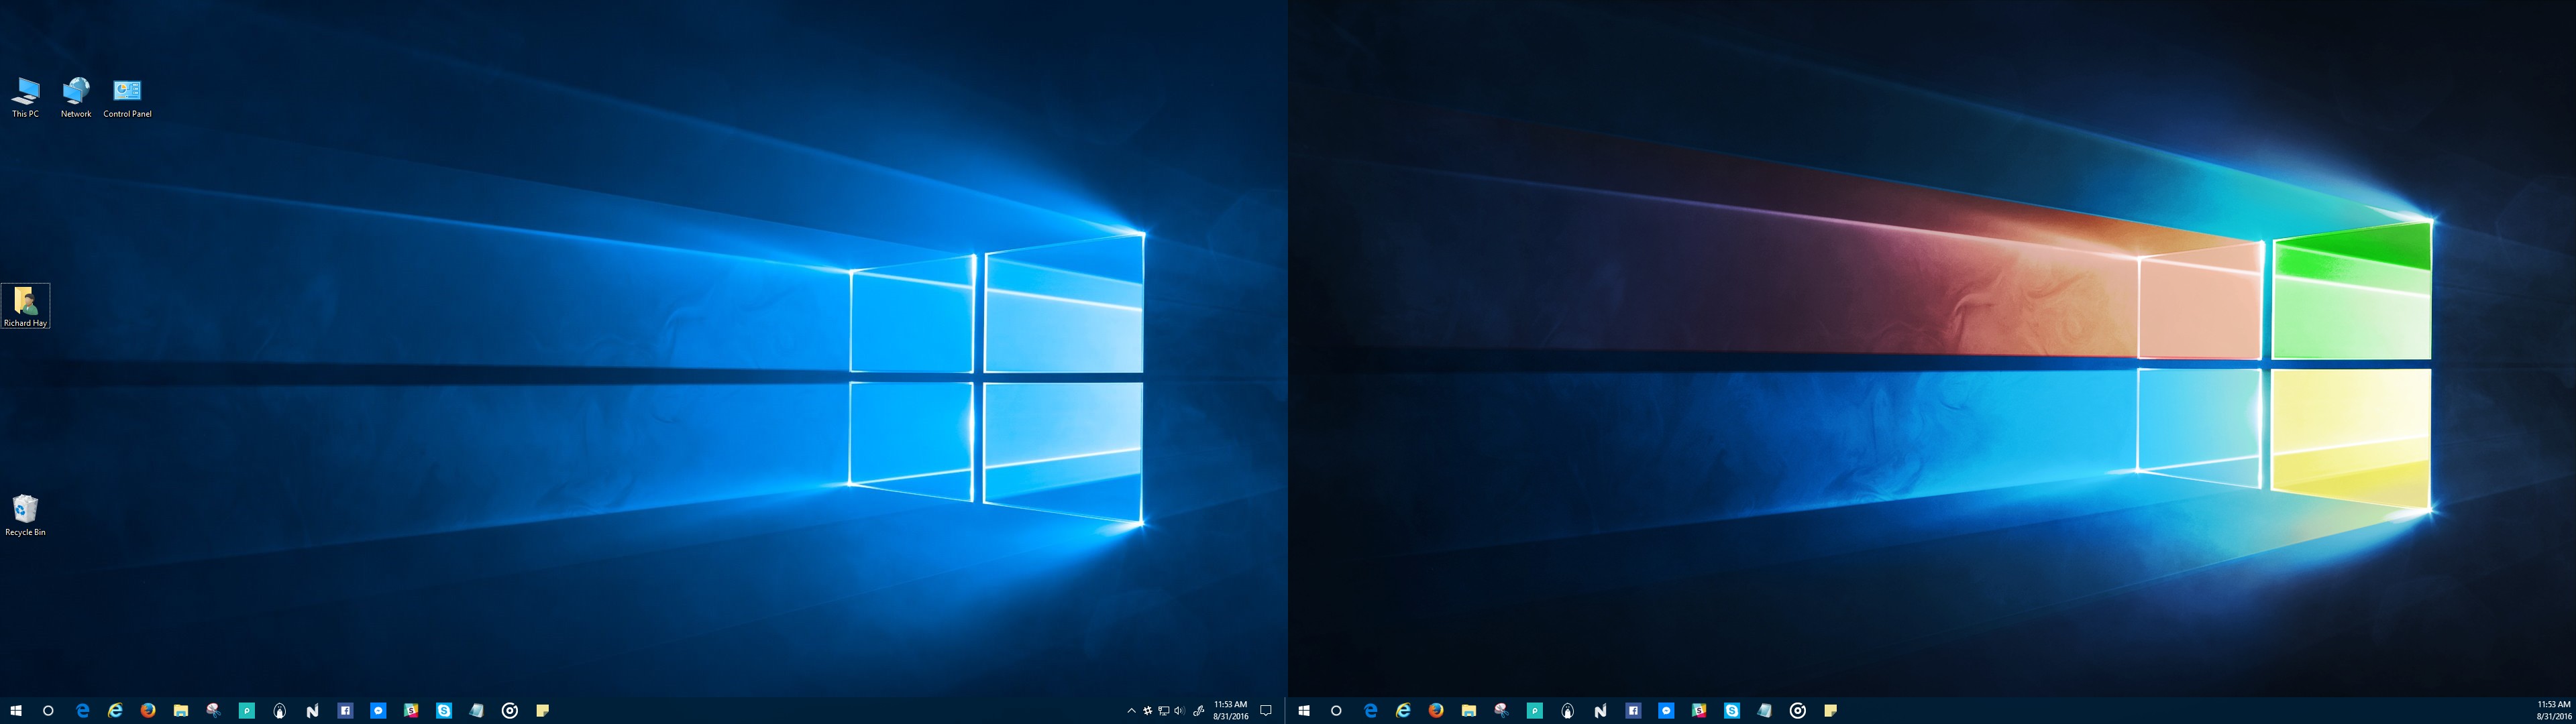 Windows 10 Dual Monitor wallpaper ·① Download free beautiful wallpapers